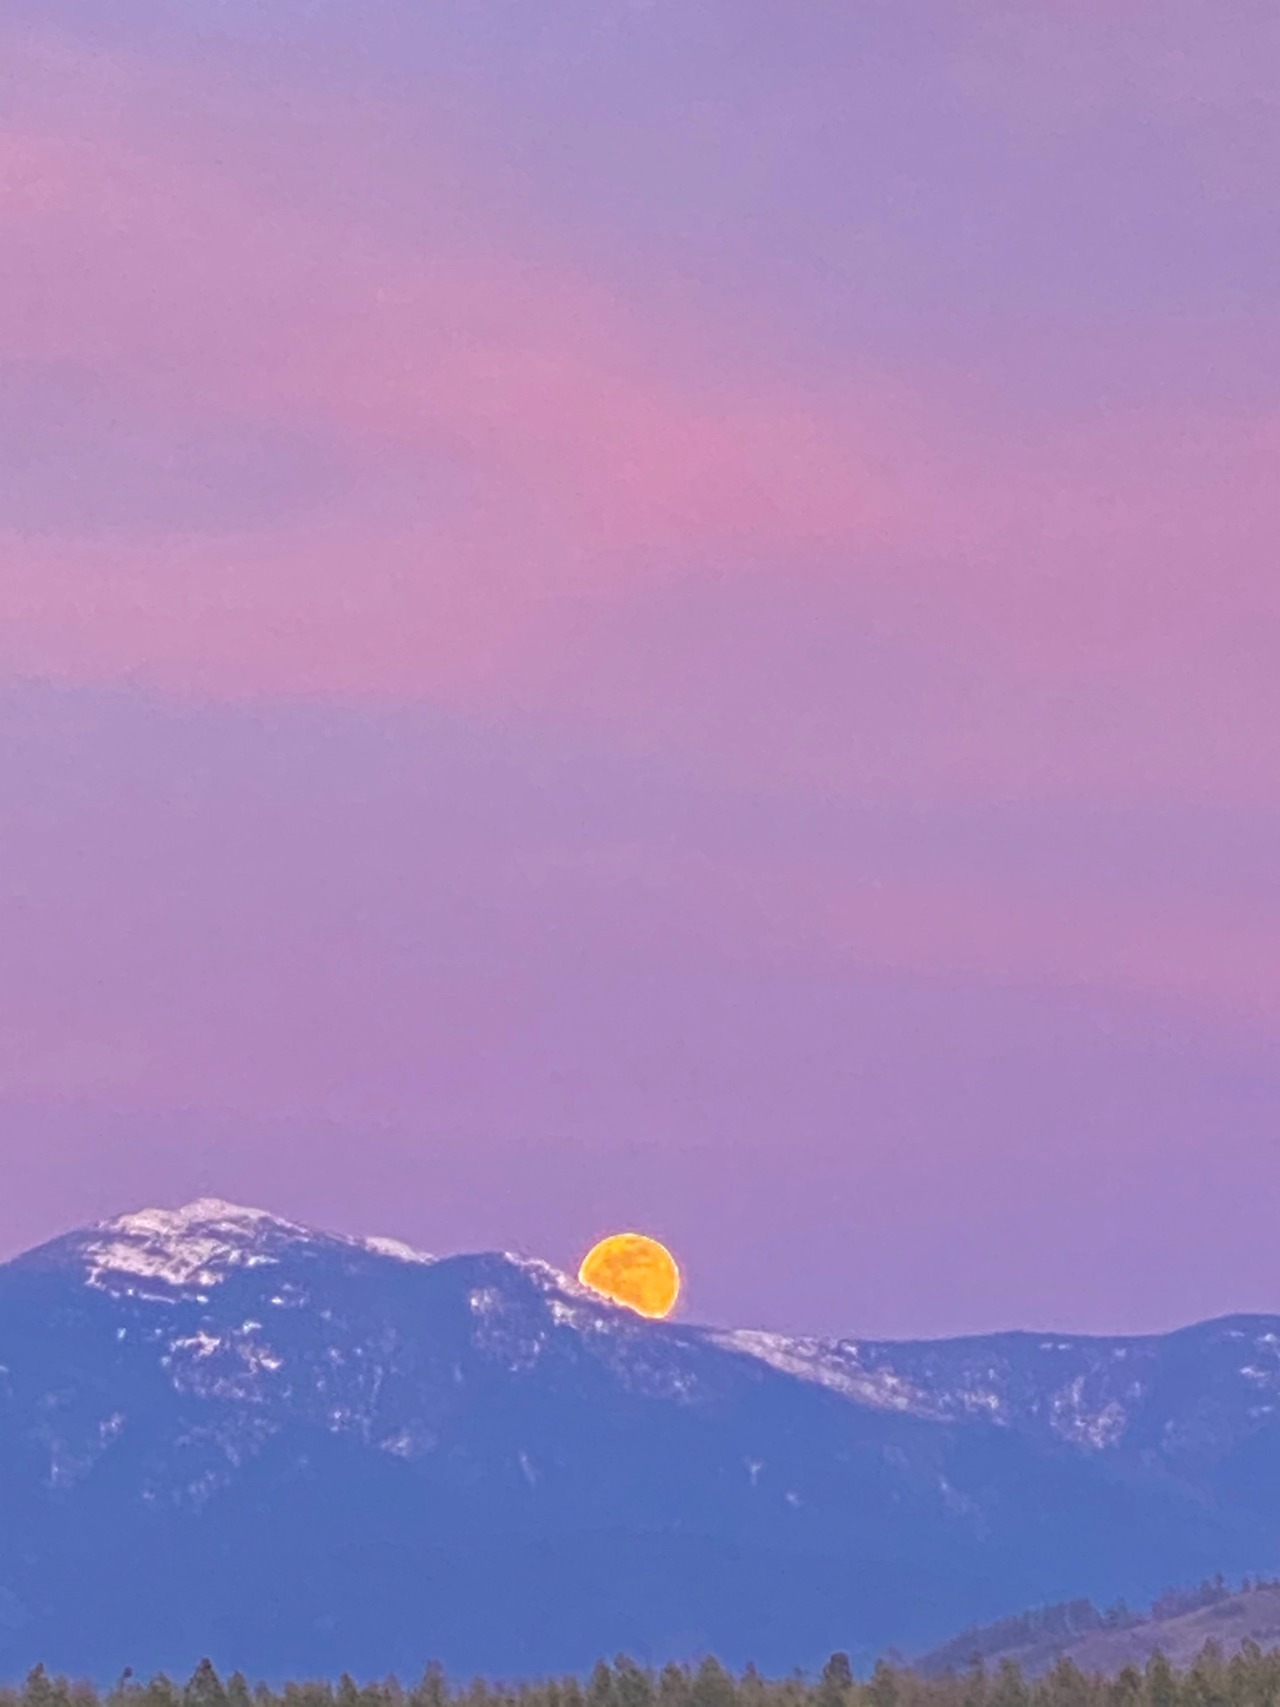 softwaring:Super pink moonrise tonight over adult photos